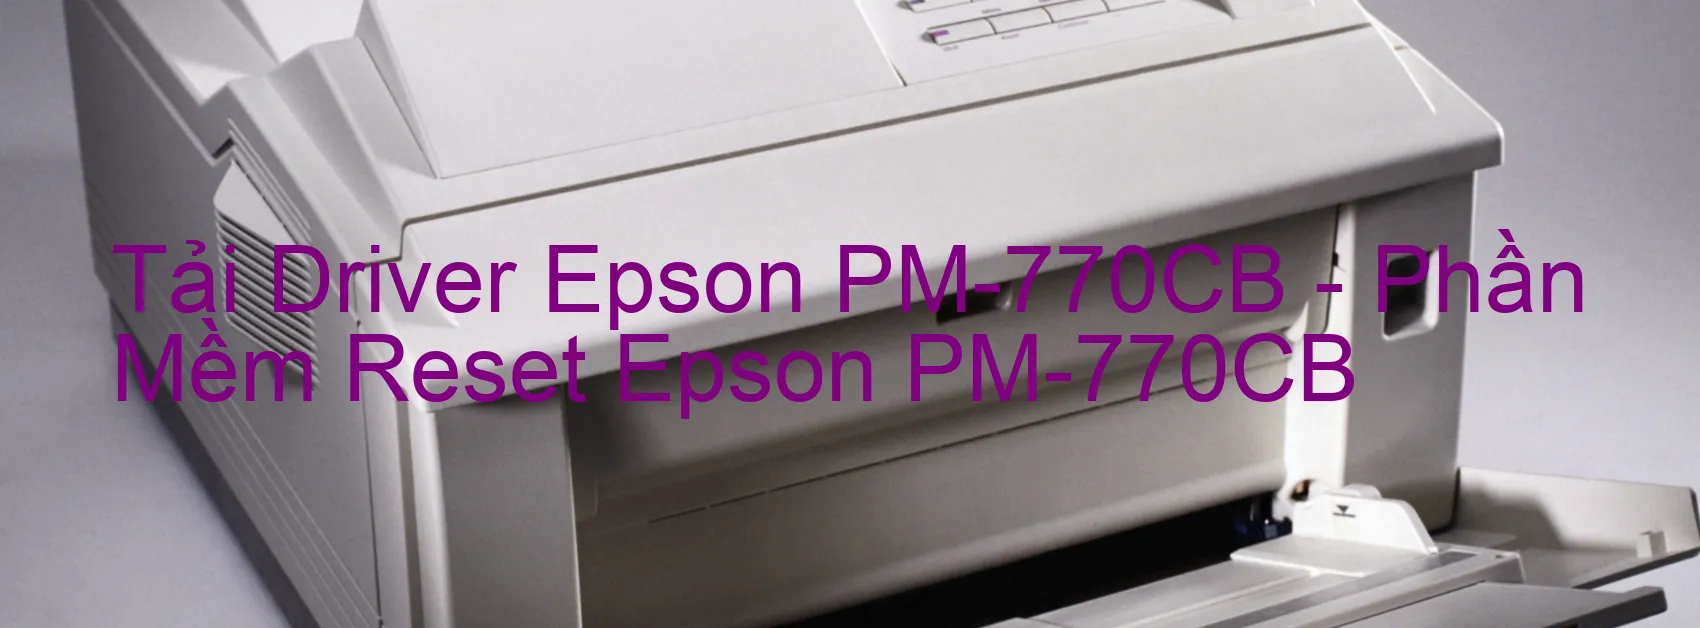 Driver Epson PM-770CB, Phần Mềm Reset Epson PM-770CB